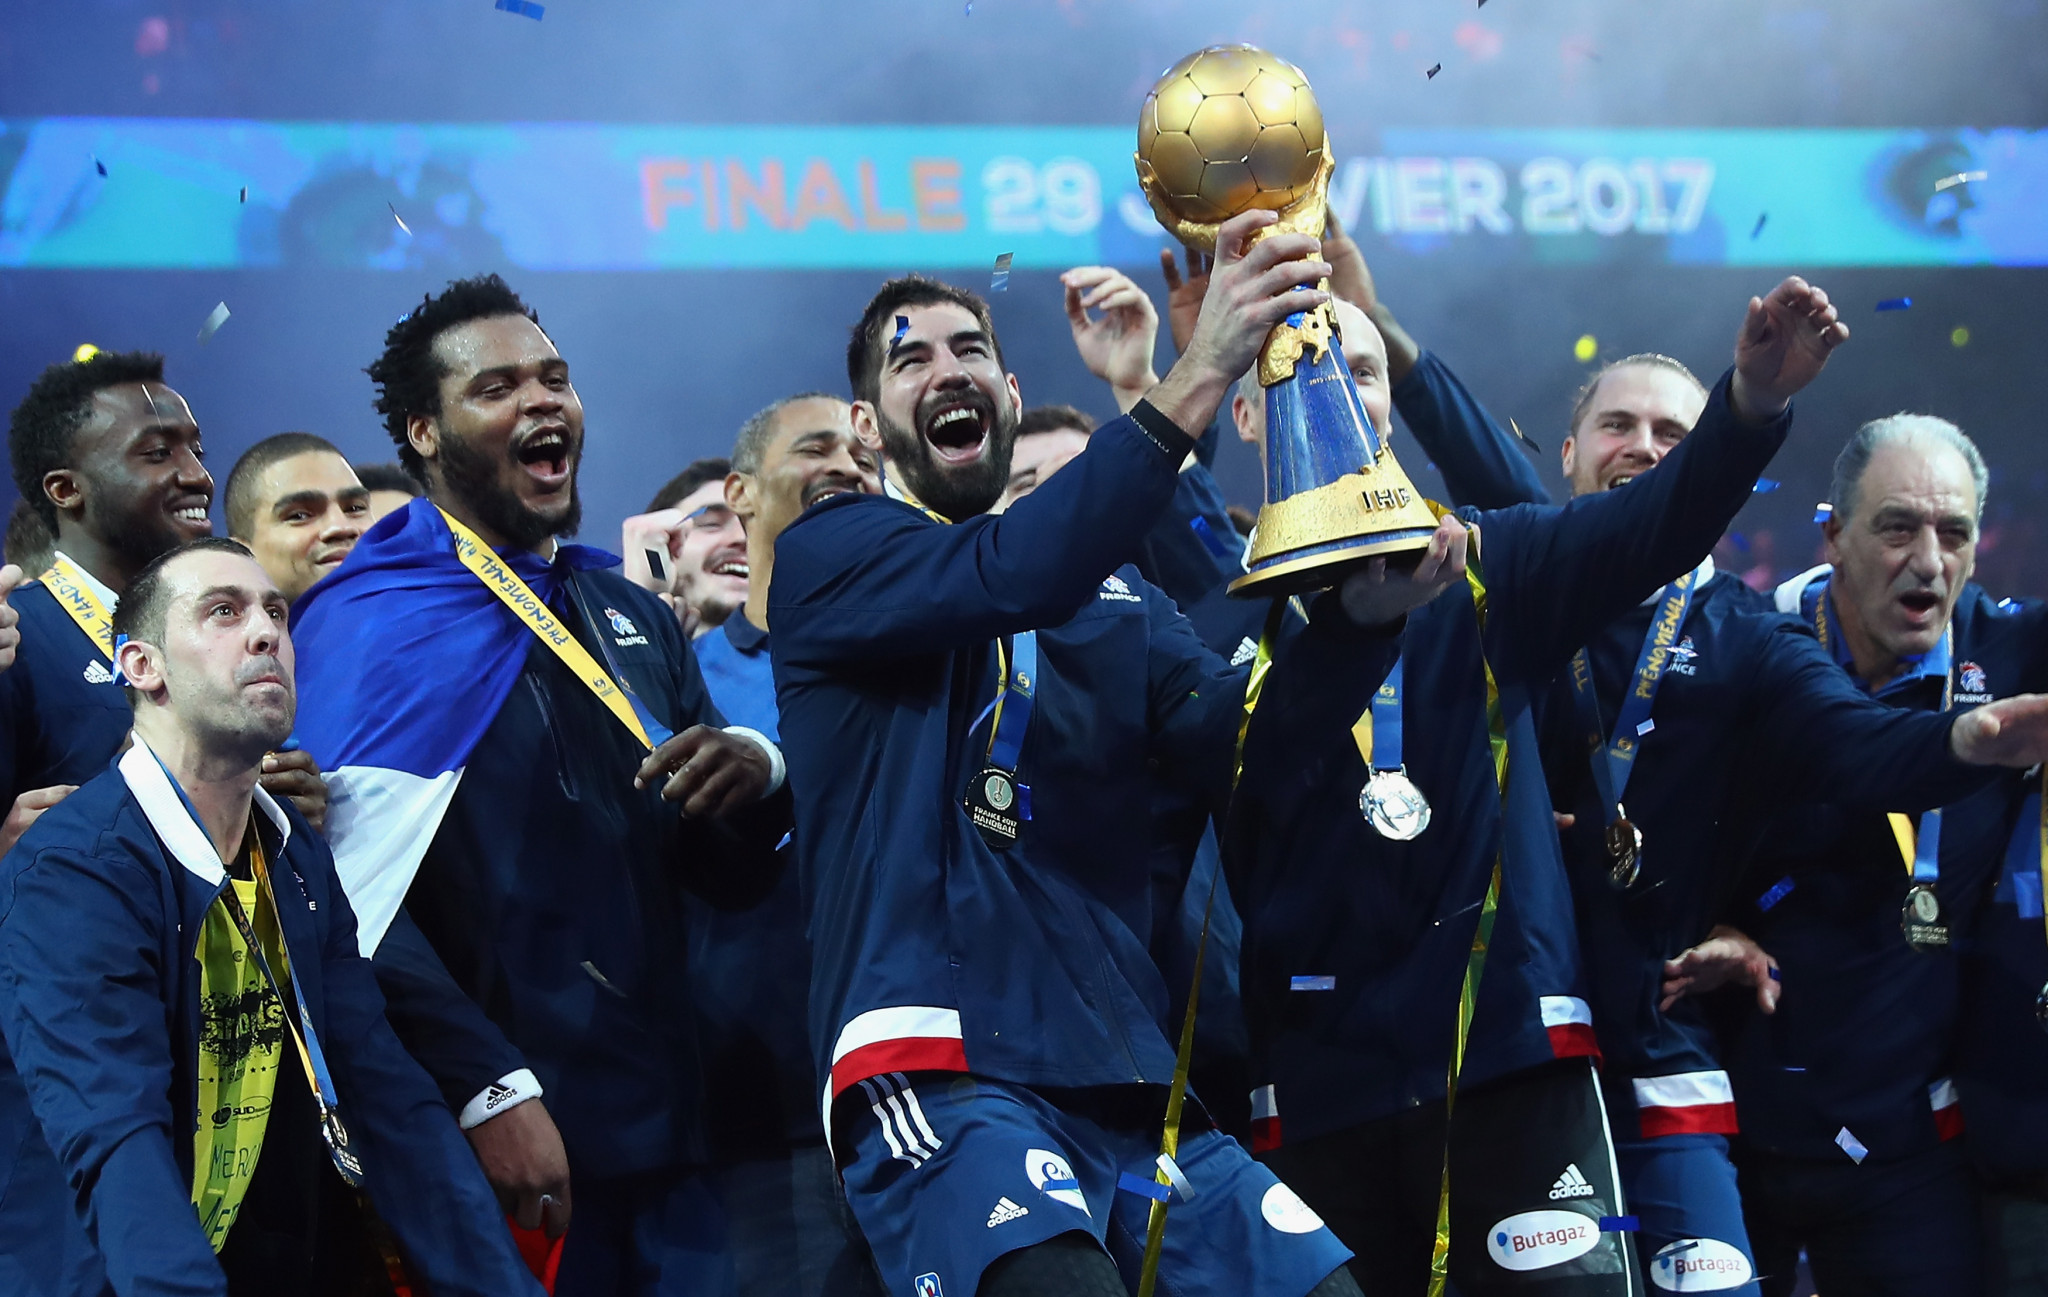 France seeking third successive title as 2019 Men's Handball World Championship looms